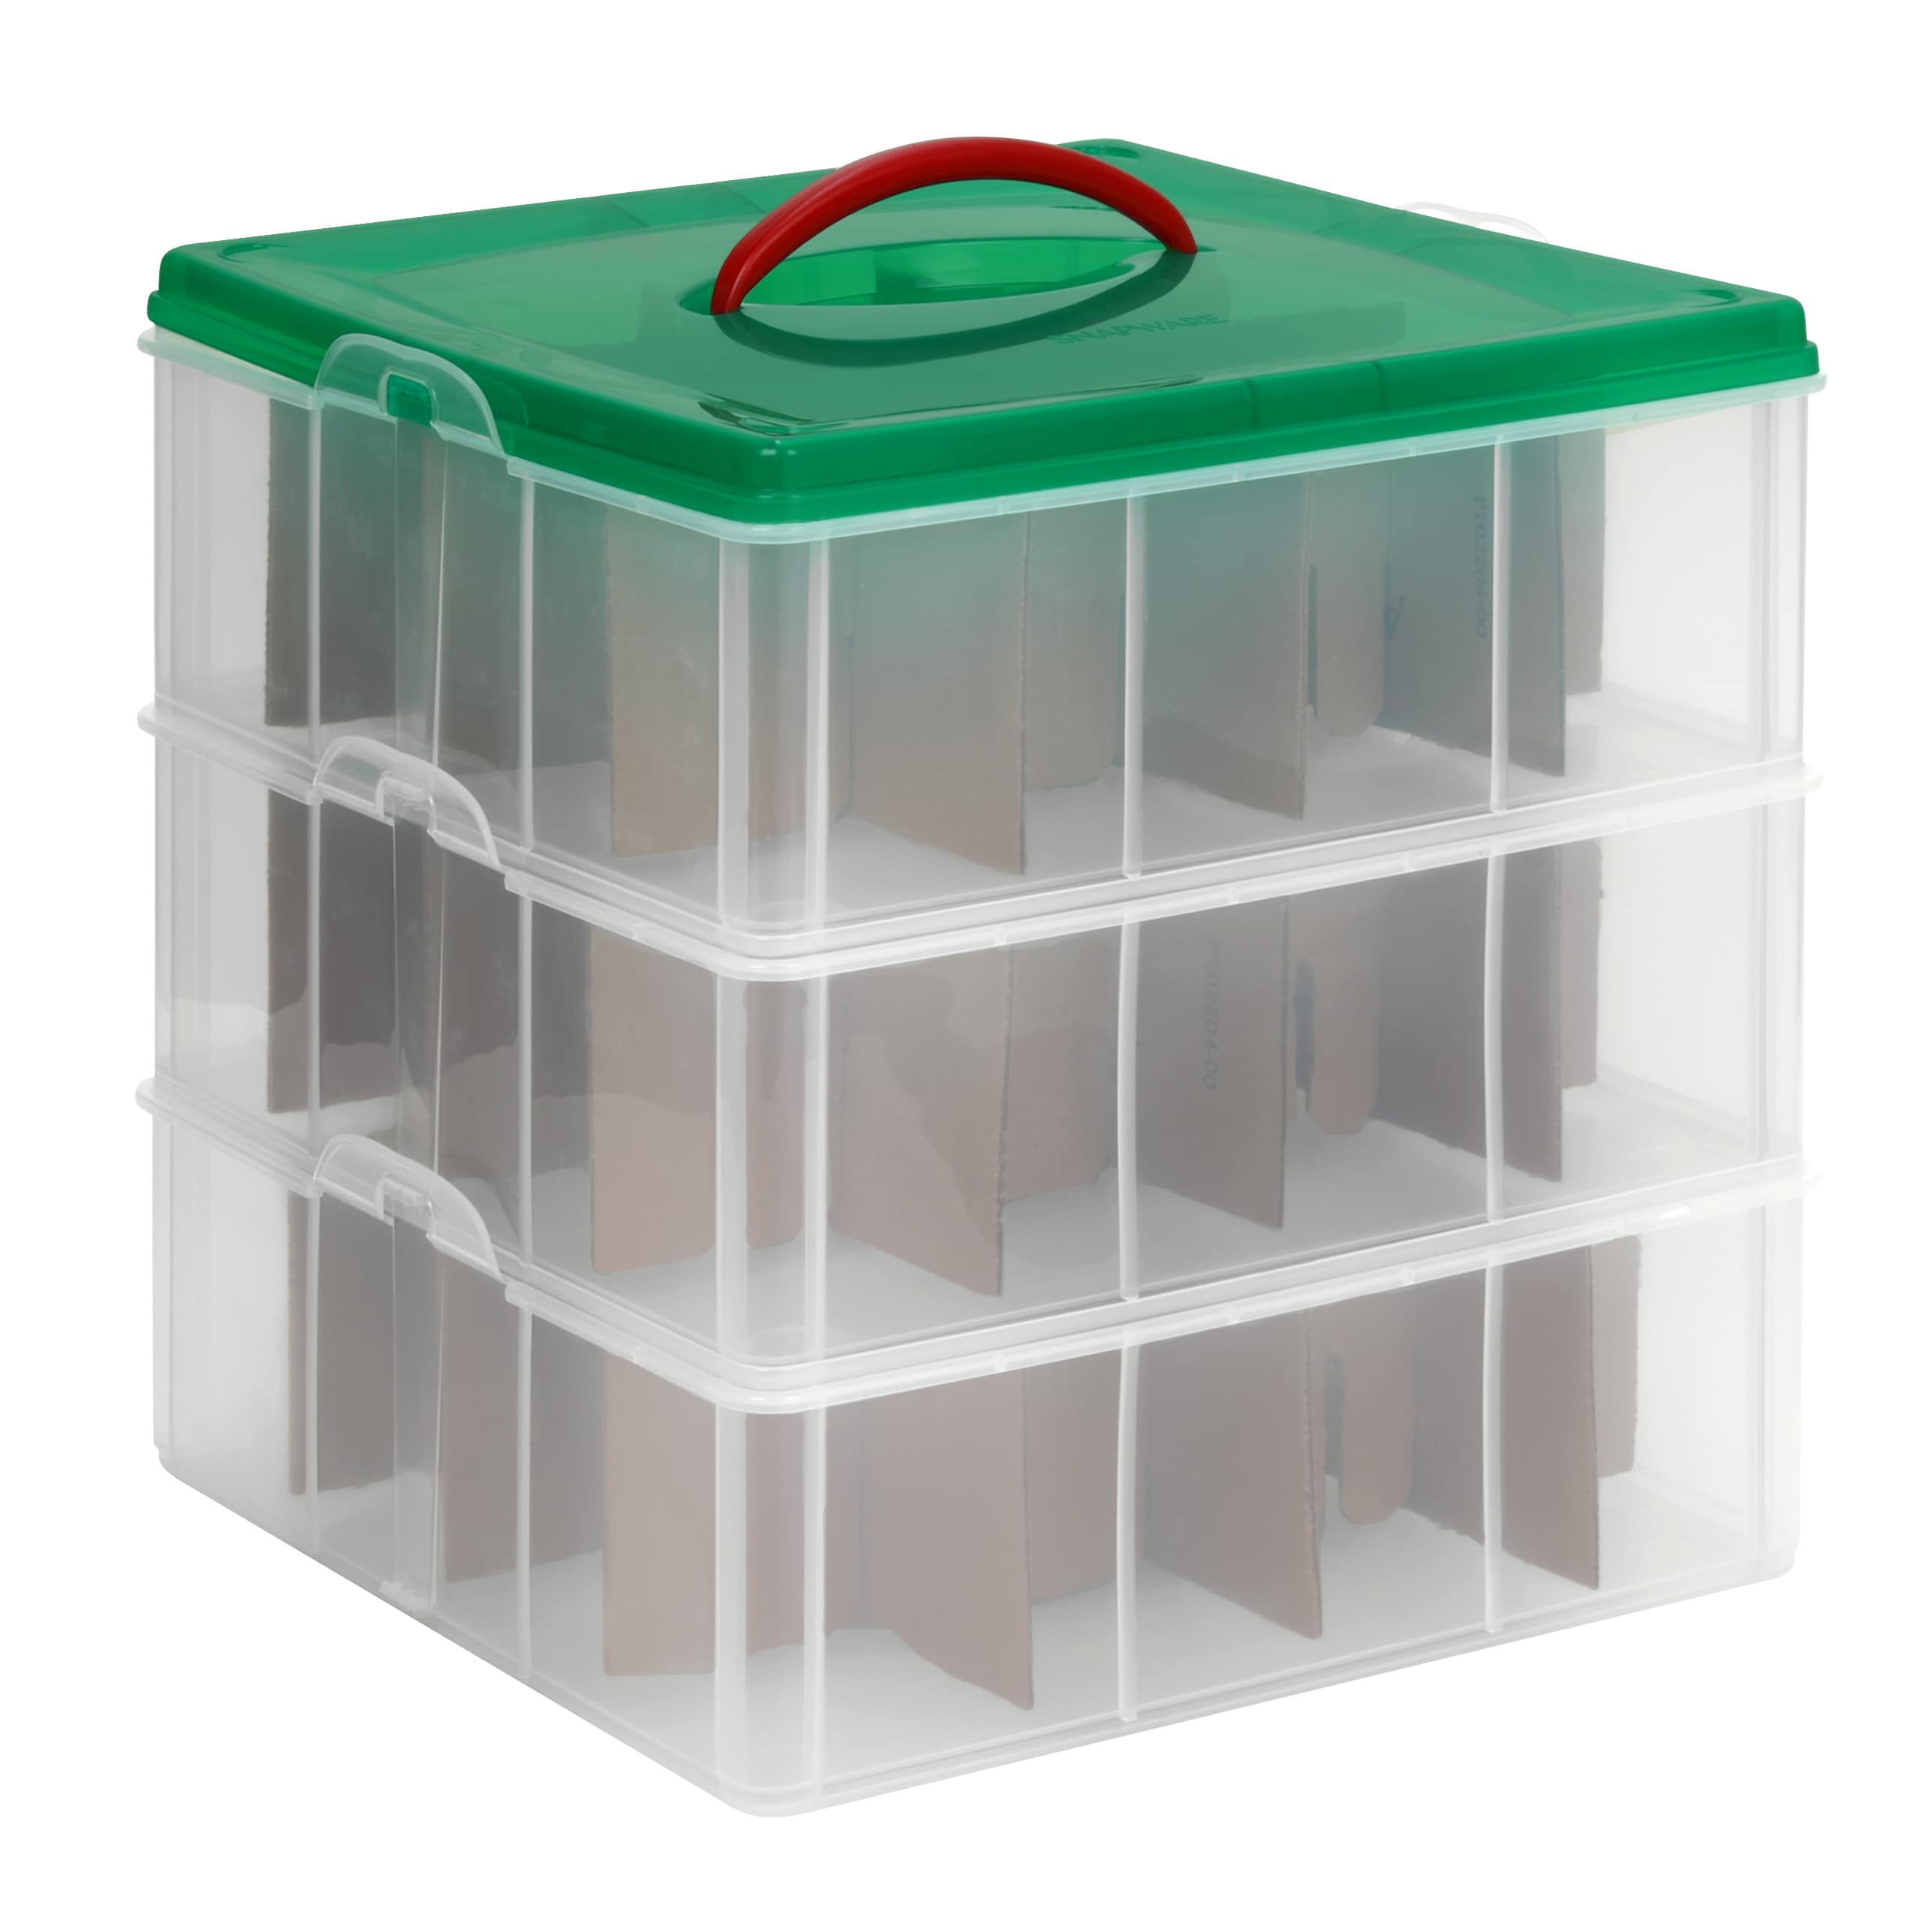 Snapware 13.1-in x 4.6-in-Compartment Clear Ornament Storage Box at